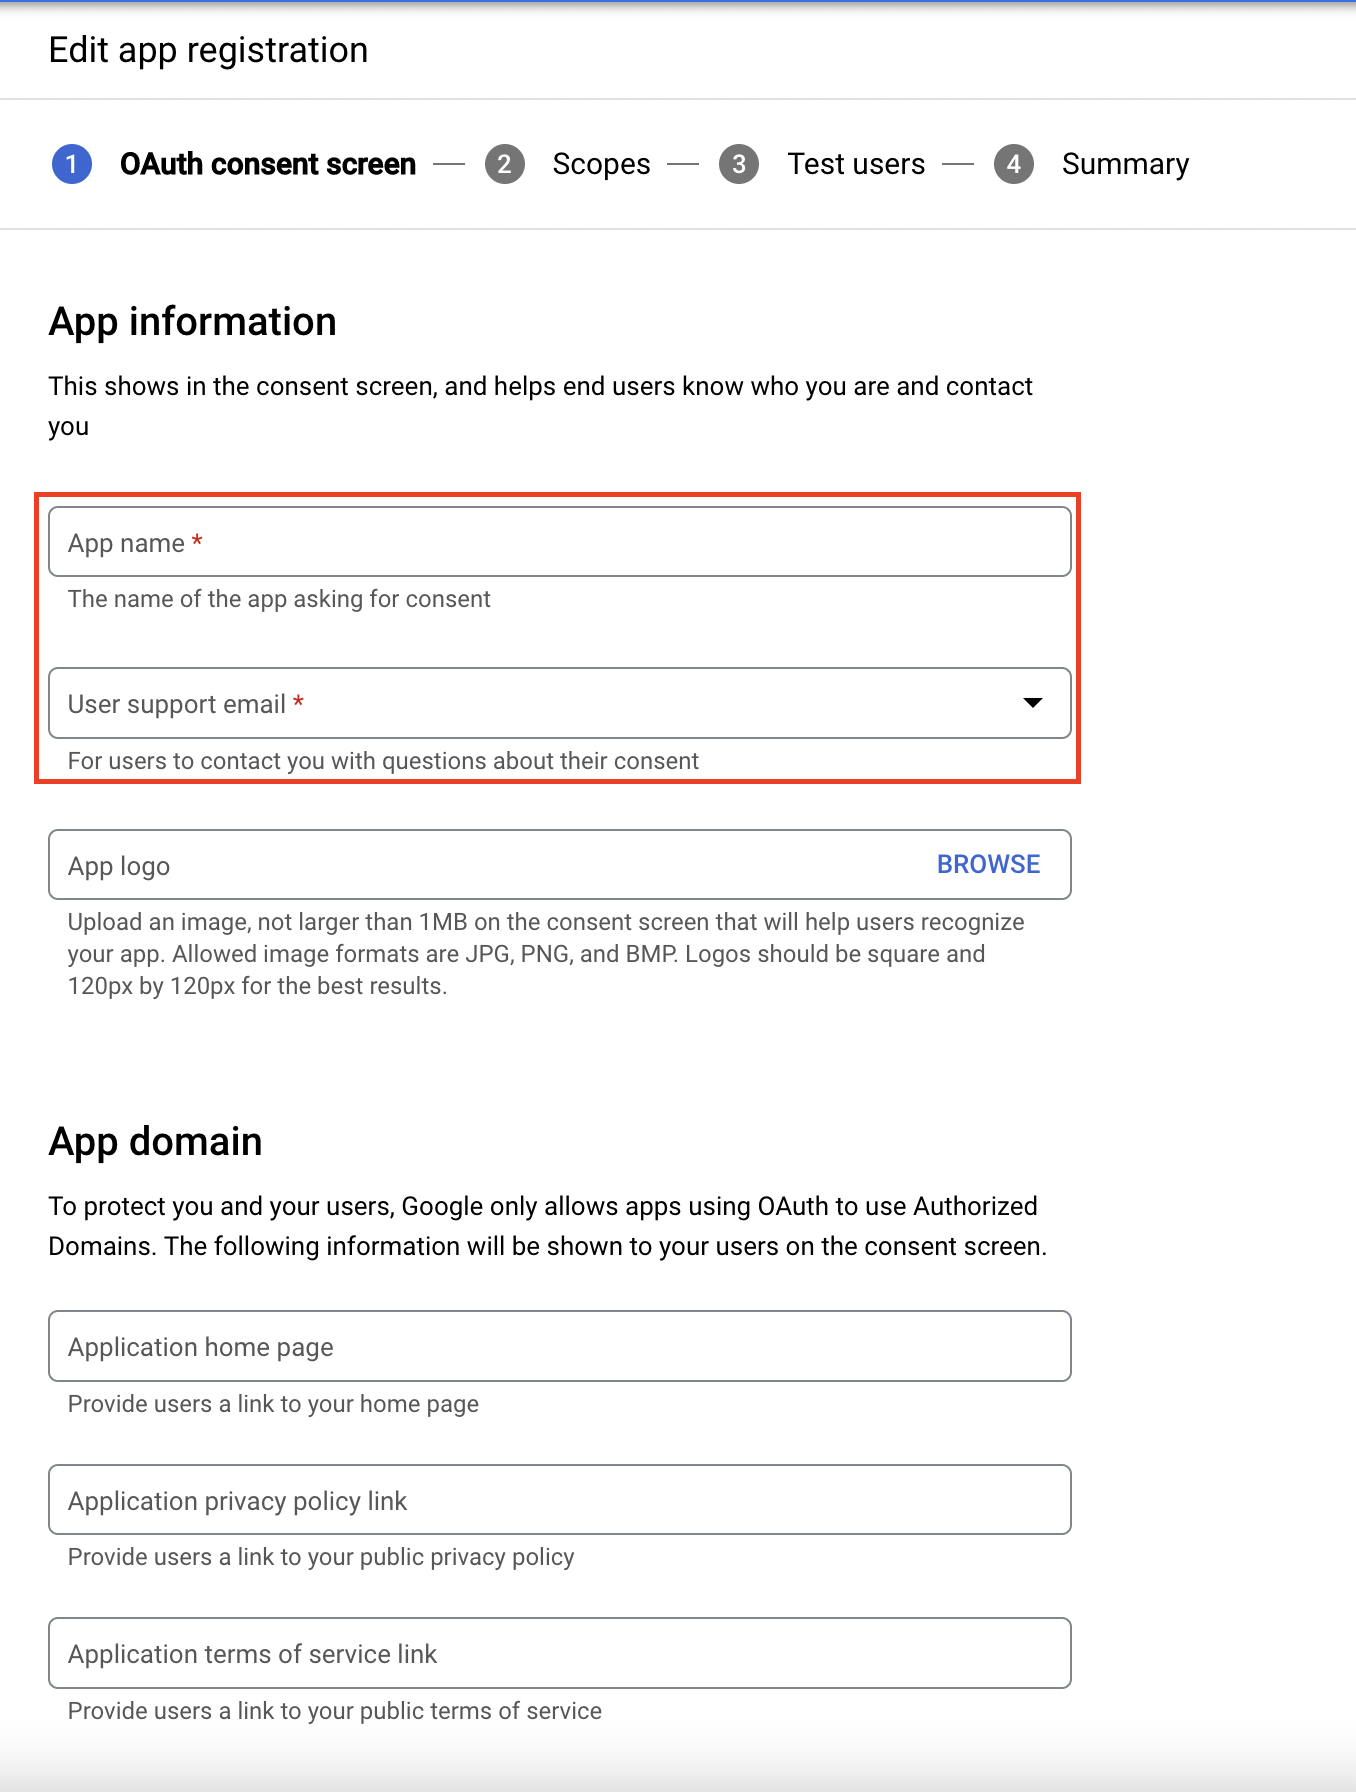 Edit app registration - OAuth2 consent screen